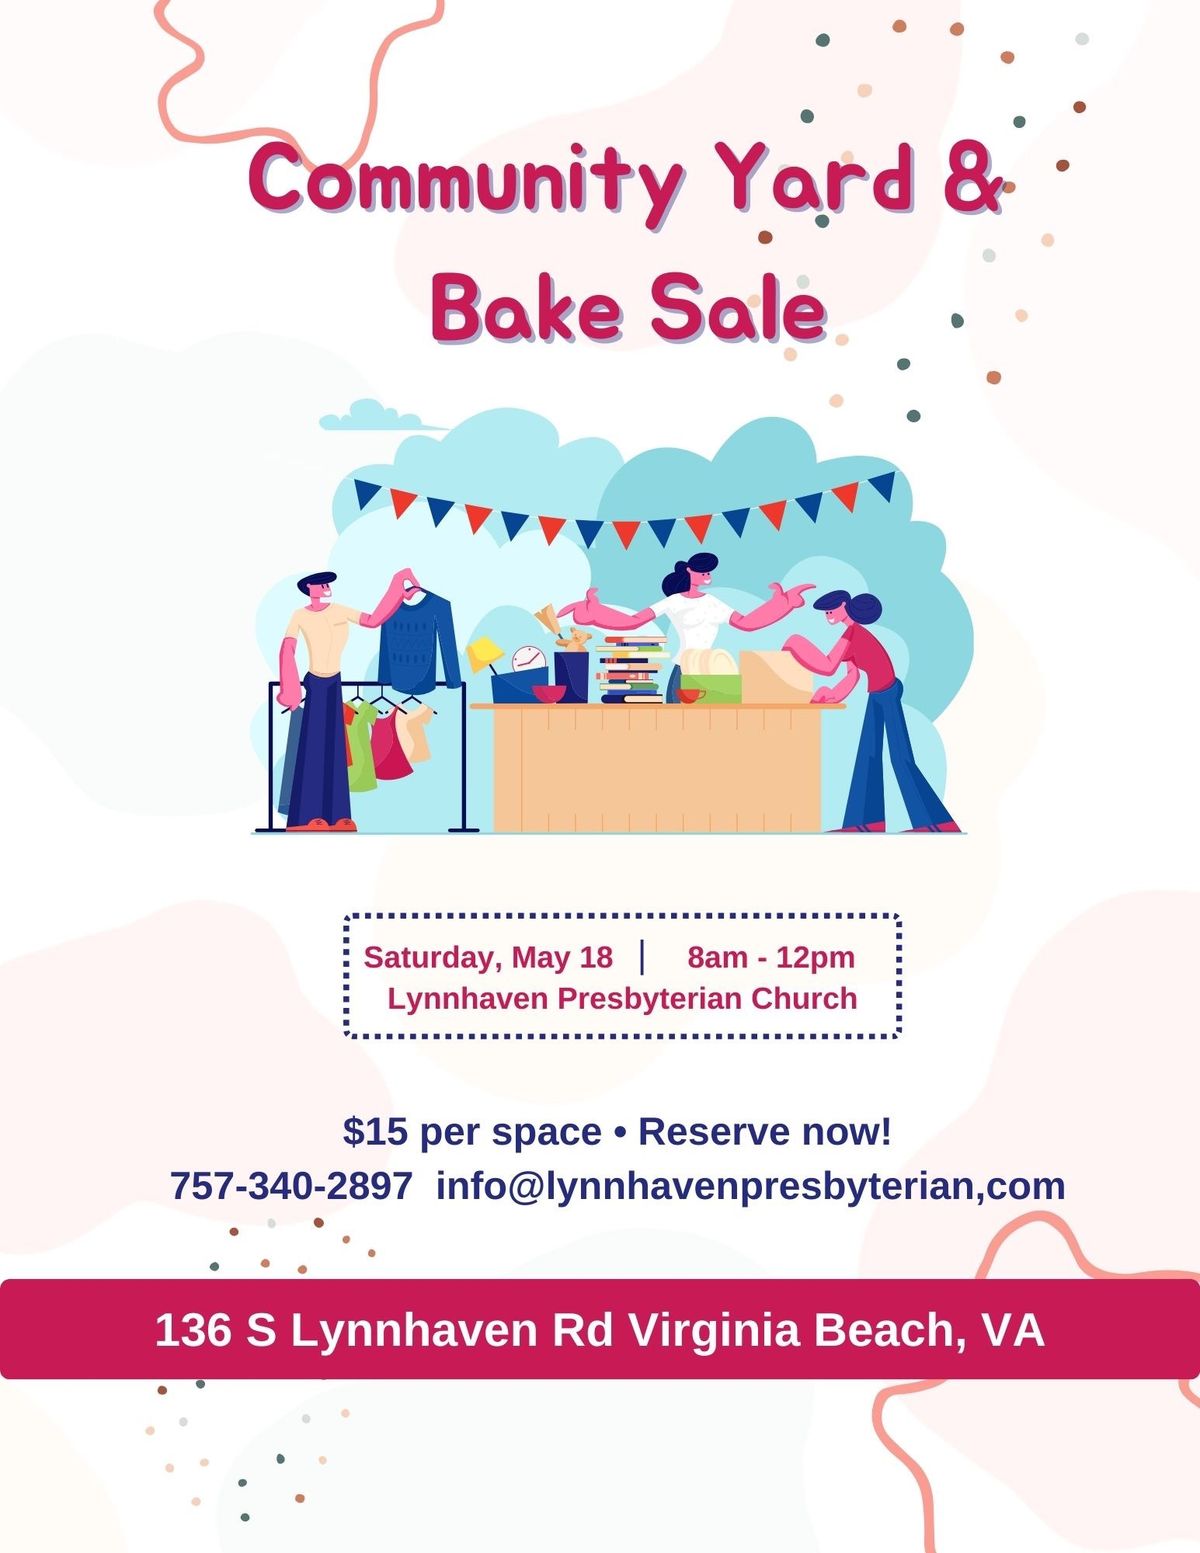 Community Yard Sale and Bake Sale!